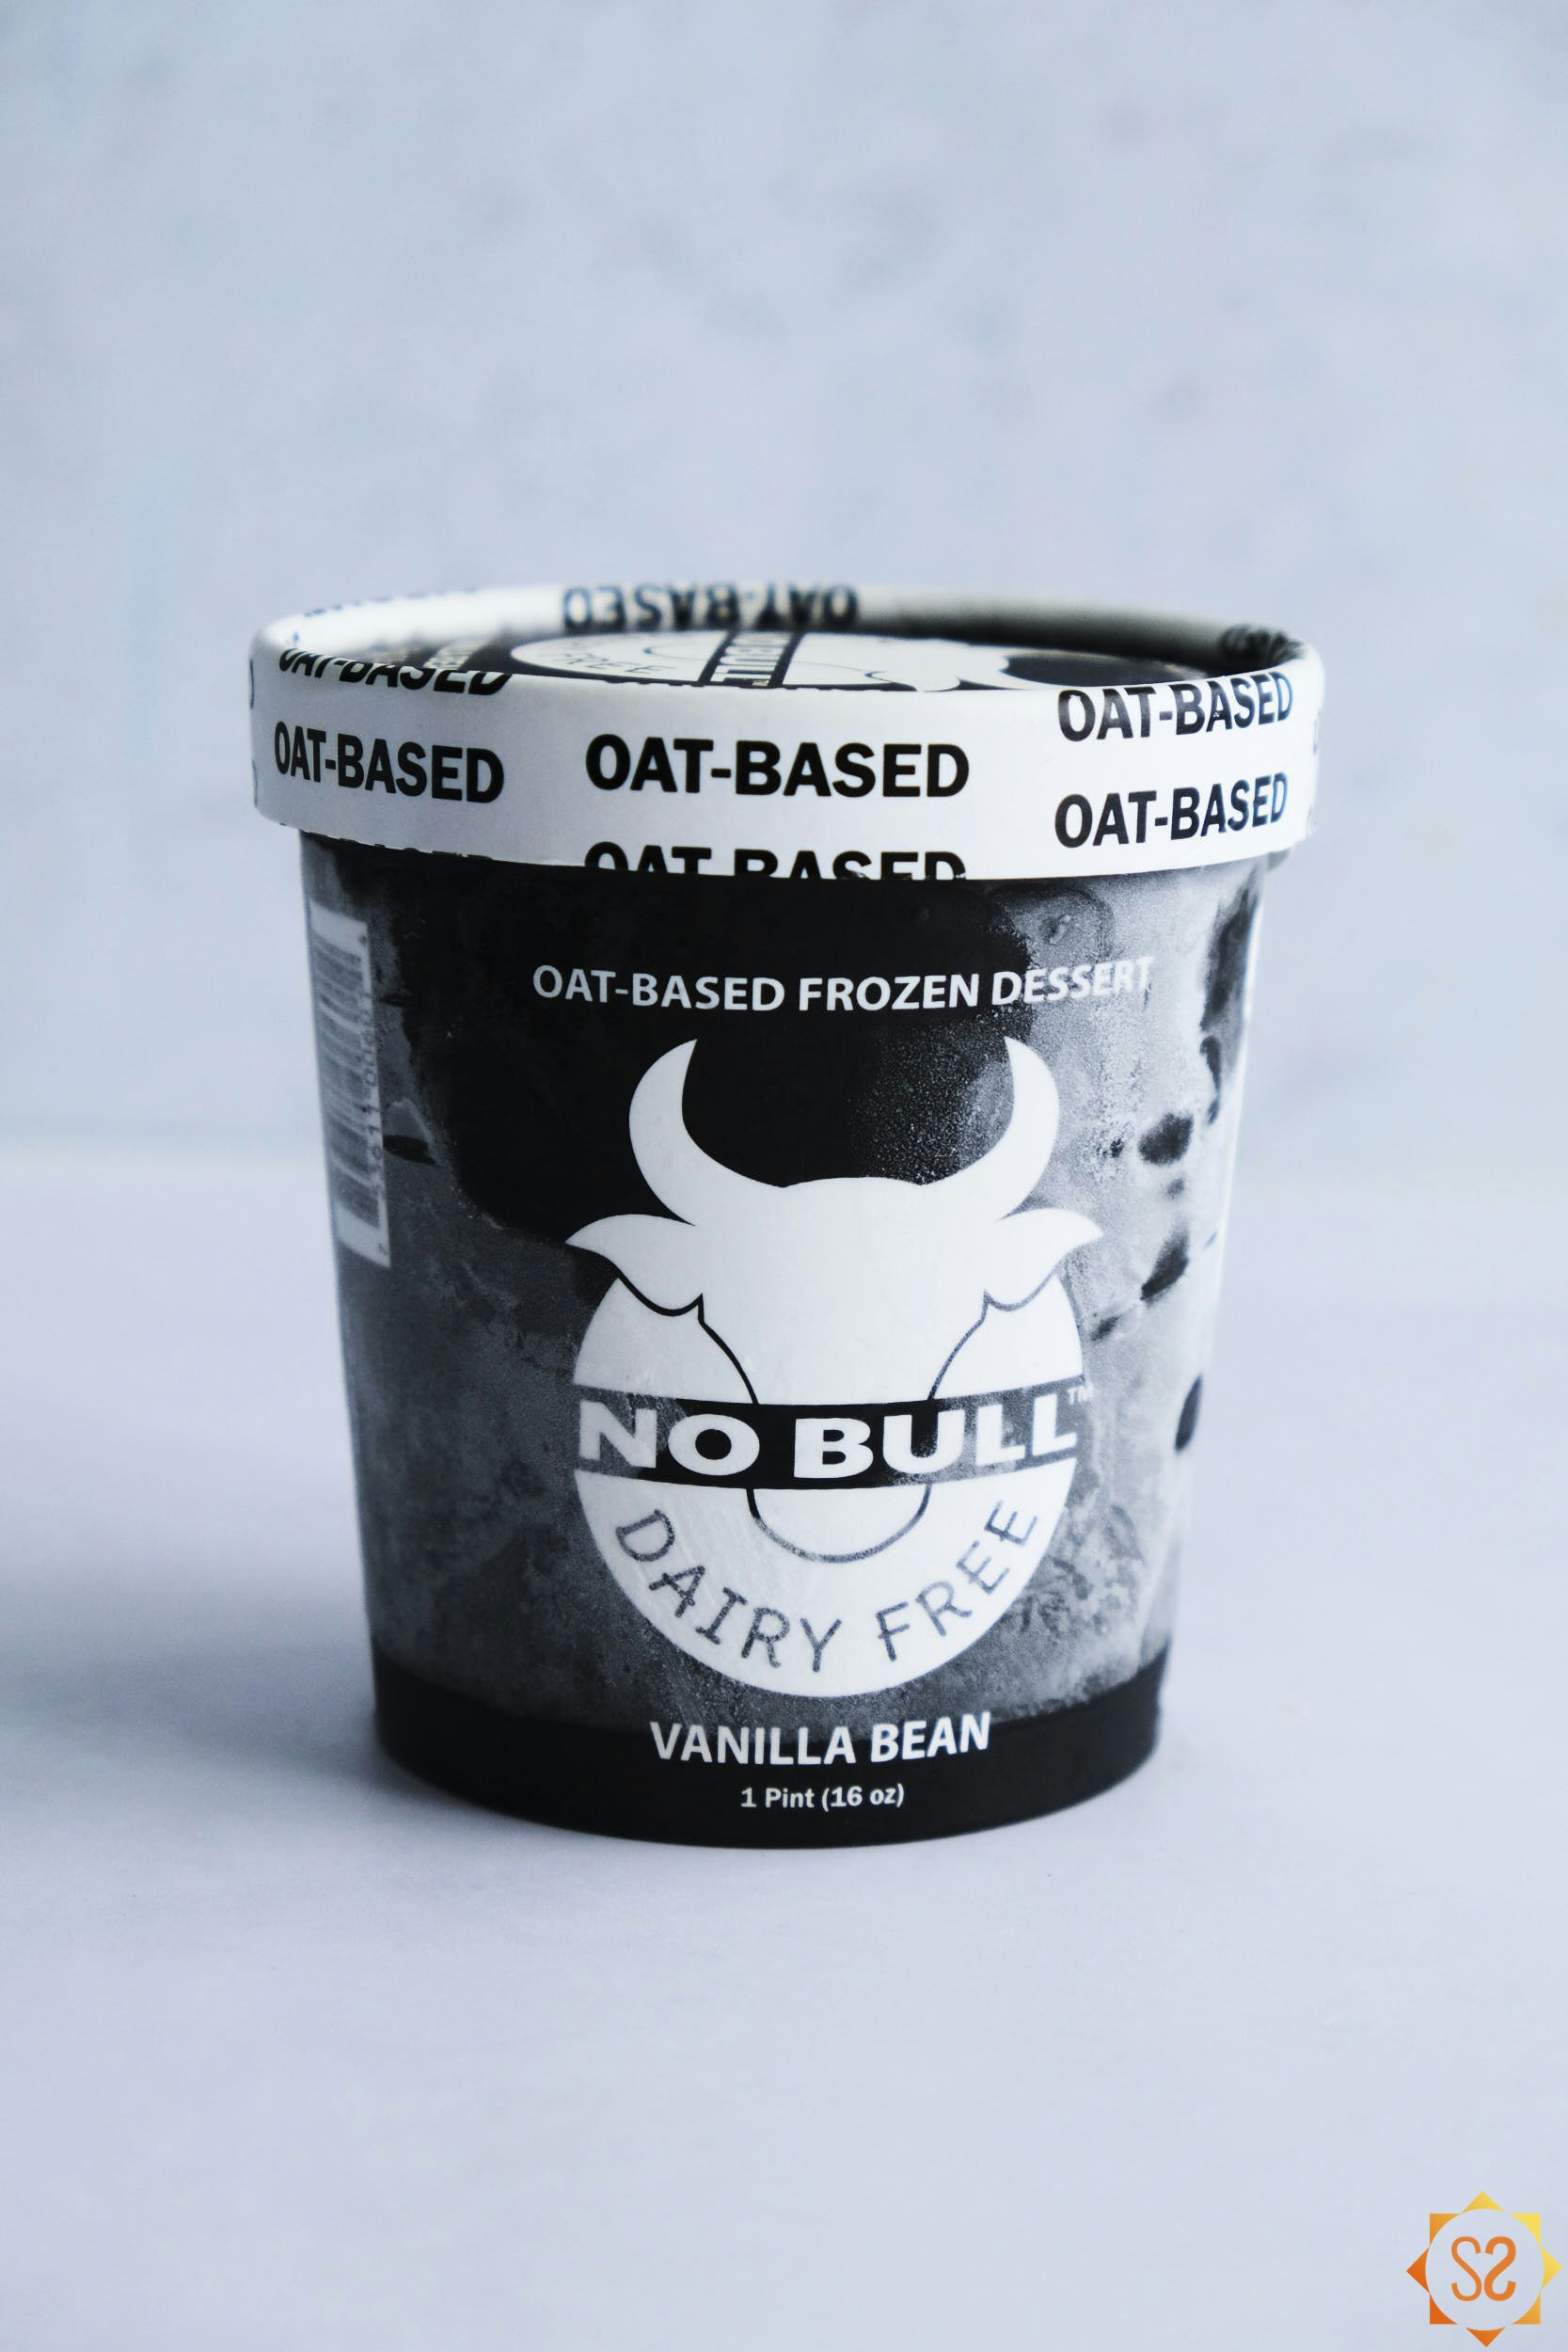 No Bull Vanilla Bean Oat-Based Frozen Dessert Pint